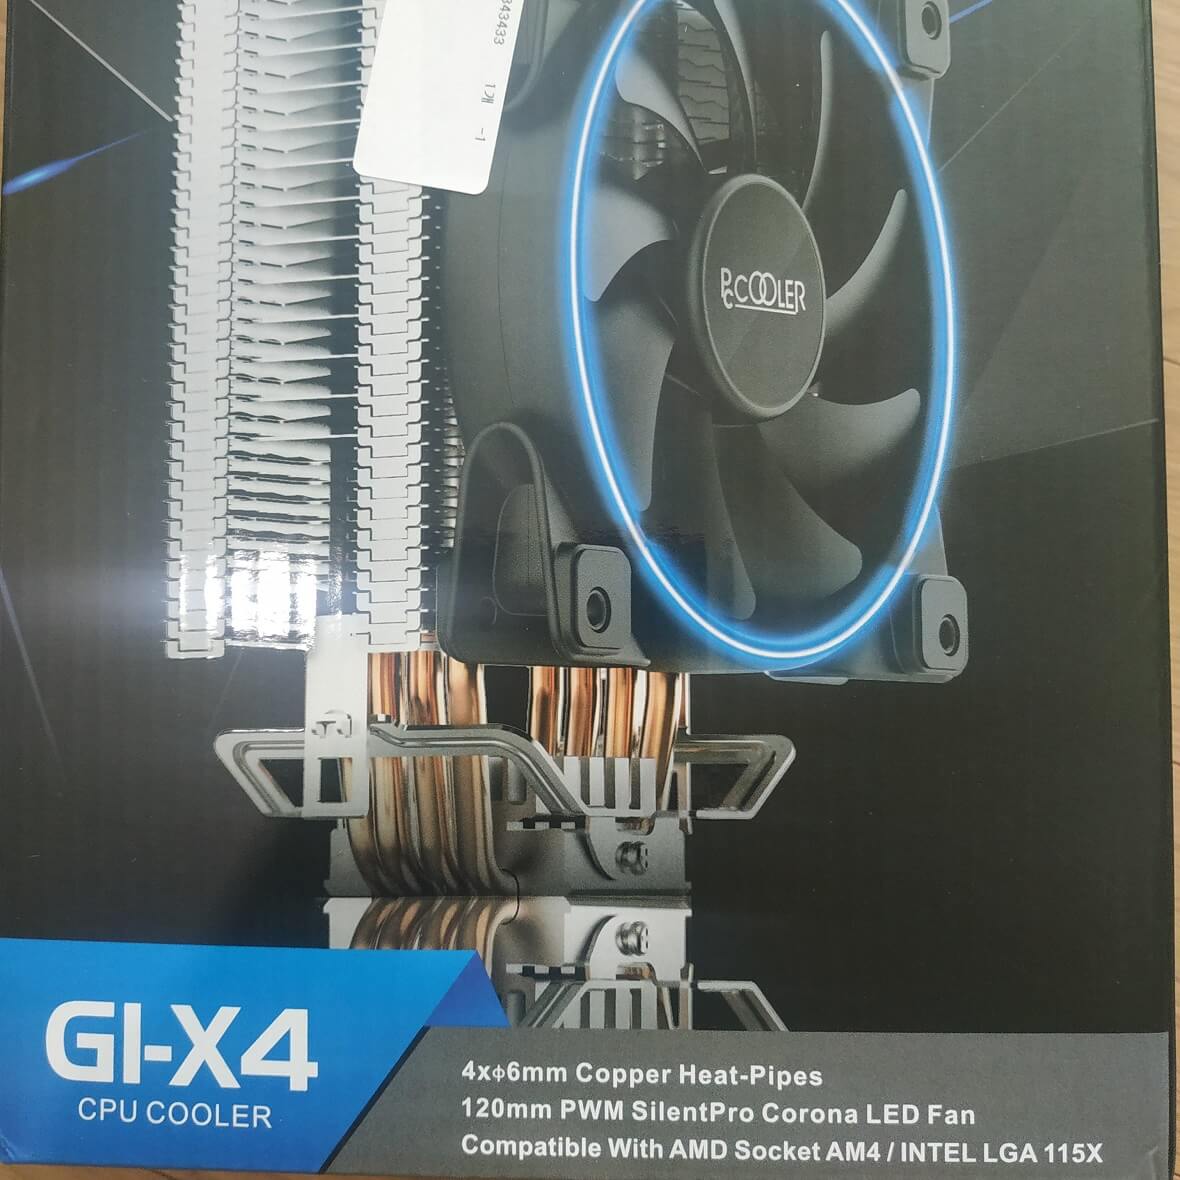 gi-x4 cooler